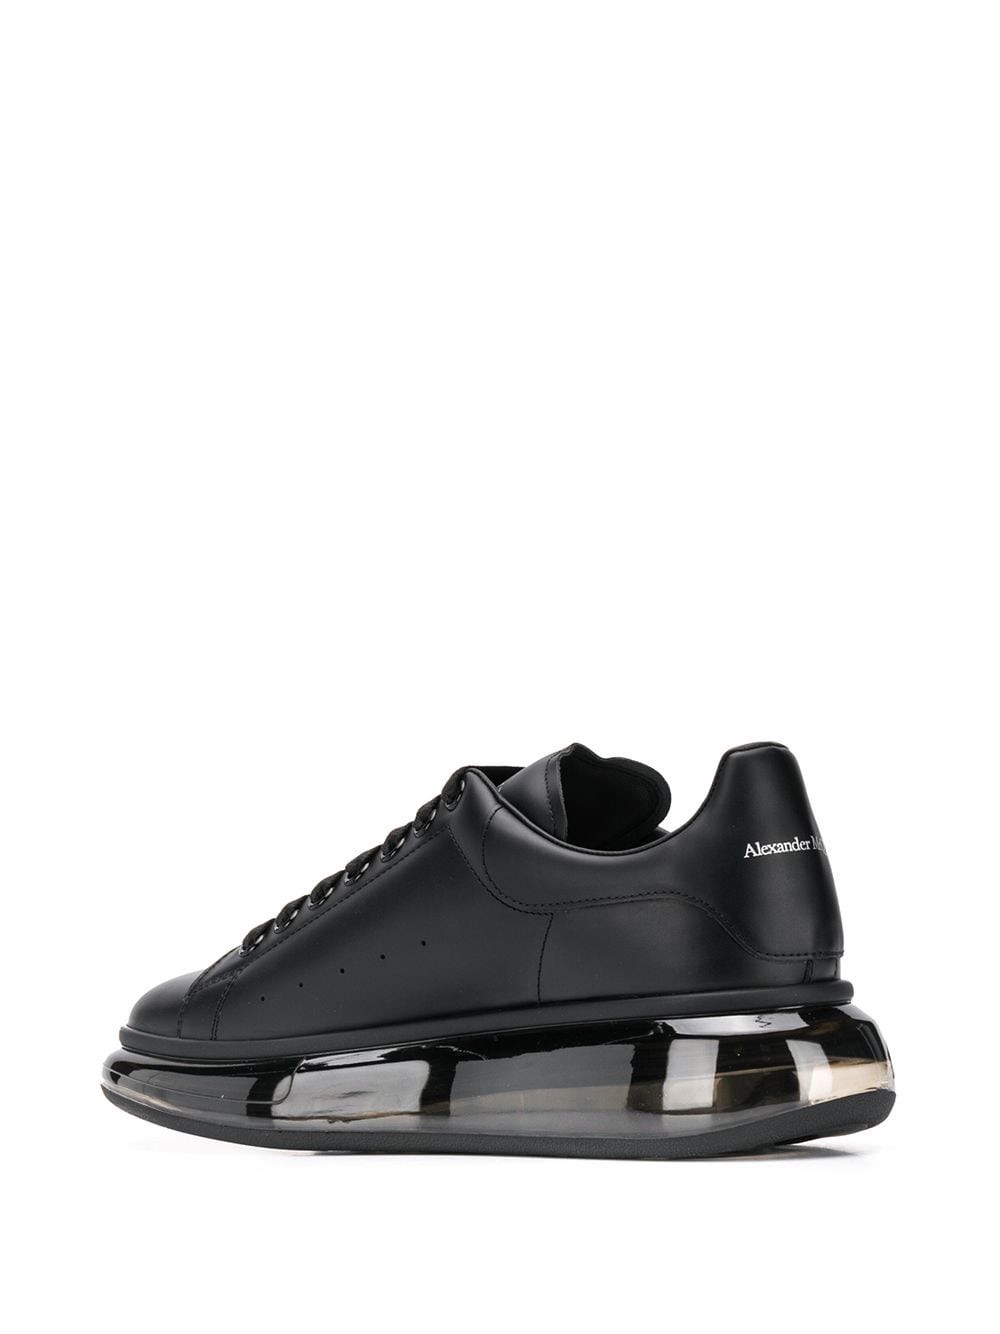 Alexander McQueen Oversized Clear Sole leather sneakers black - Maison De Fashion 